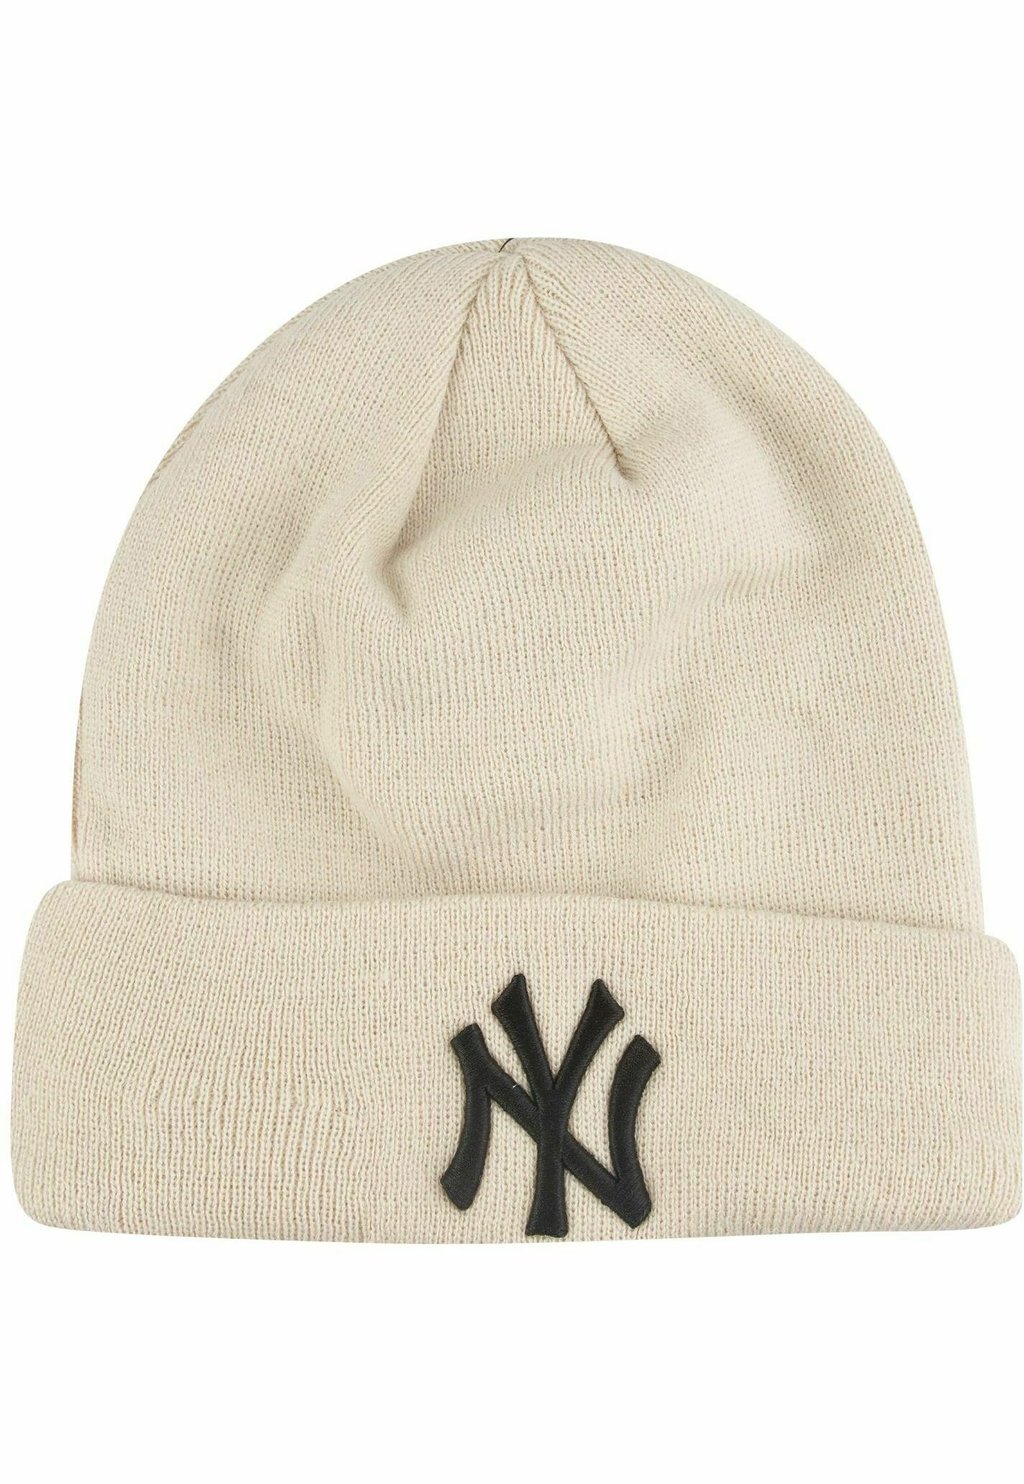 Шапка CUFF NEW YORK YANKEES New Era, цвет beige шапка 47brand brain freeze cuff knit new york yankees серый b brnfz17ace gy